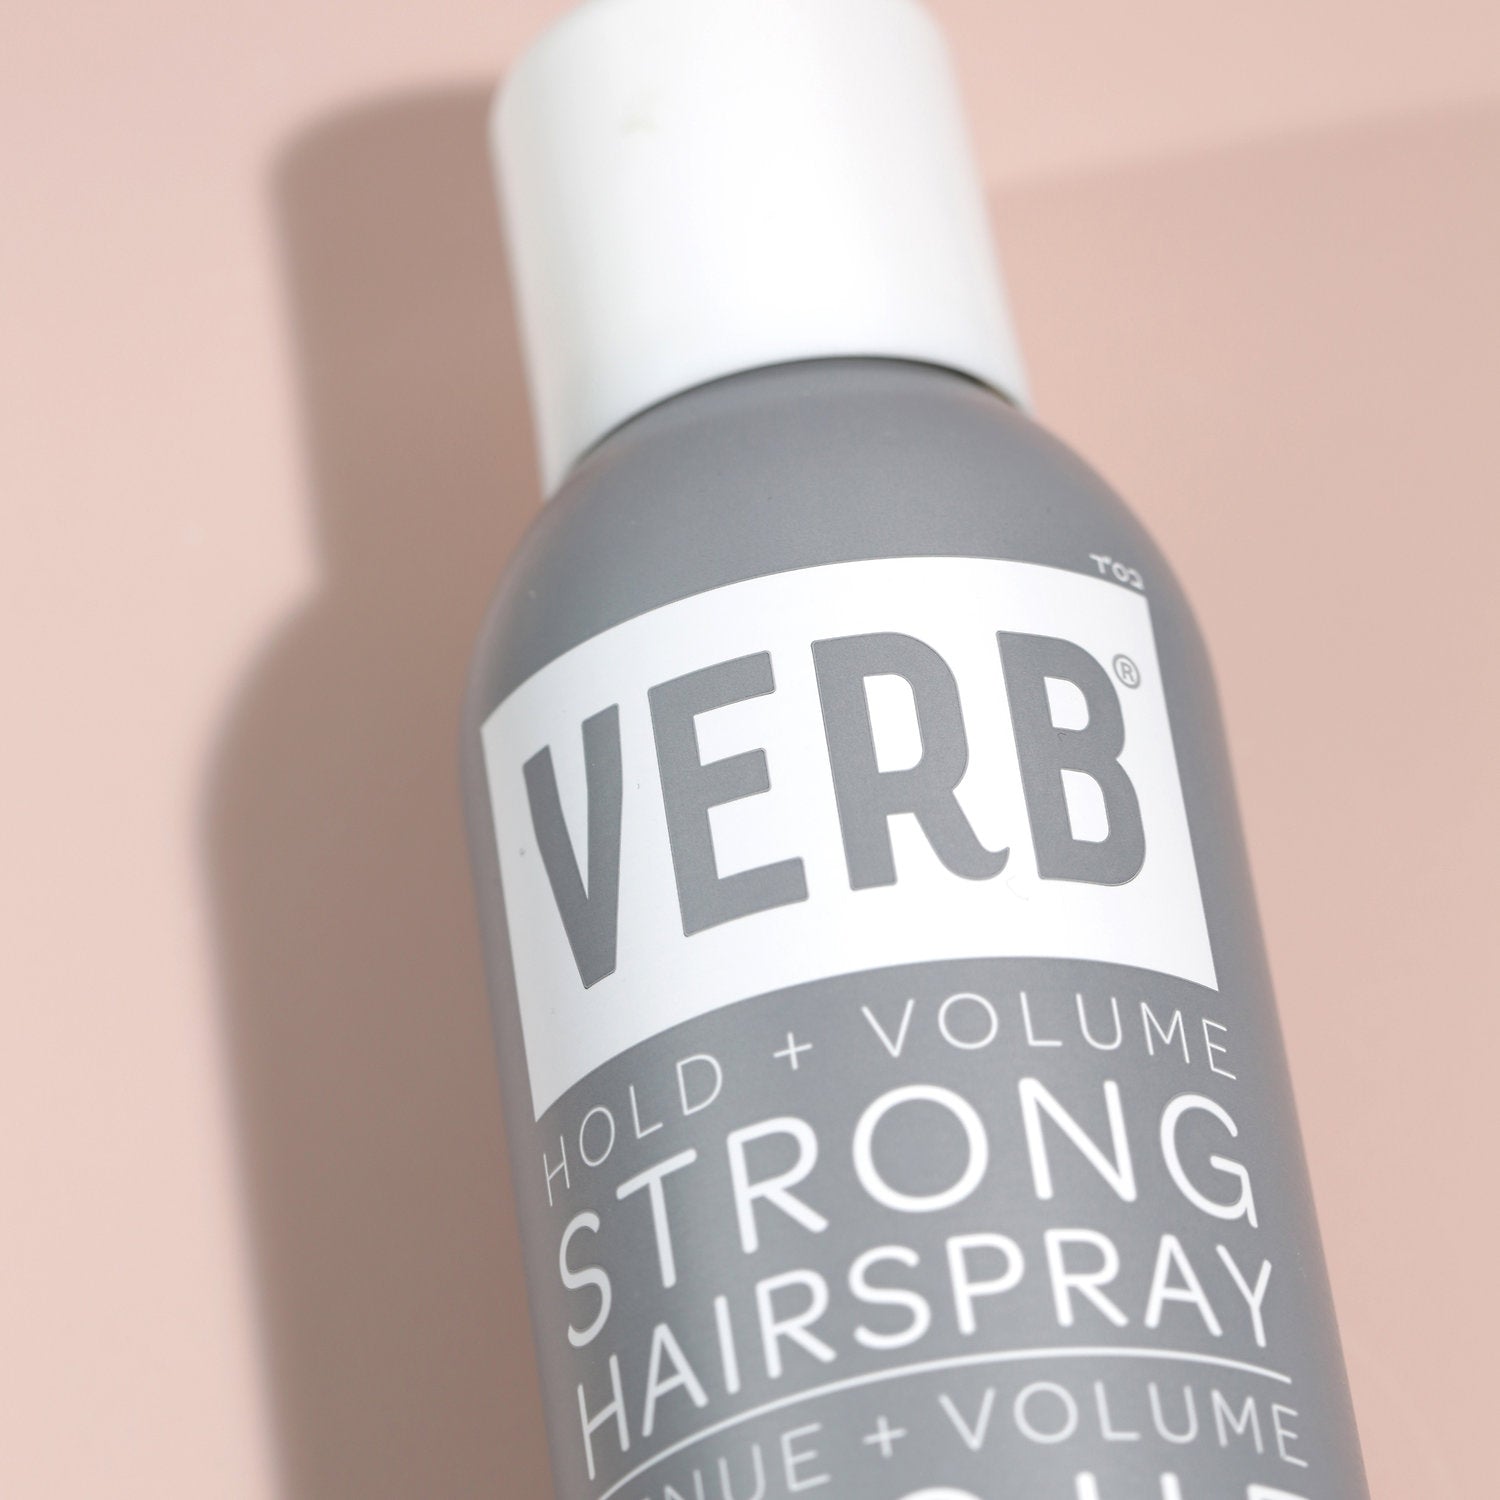 Verb Strong HairSpray - Blend Box